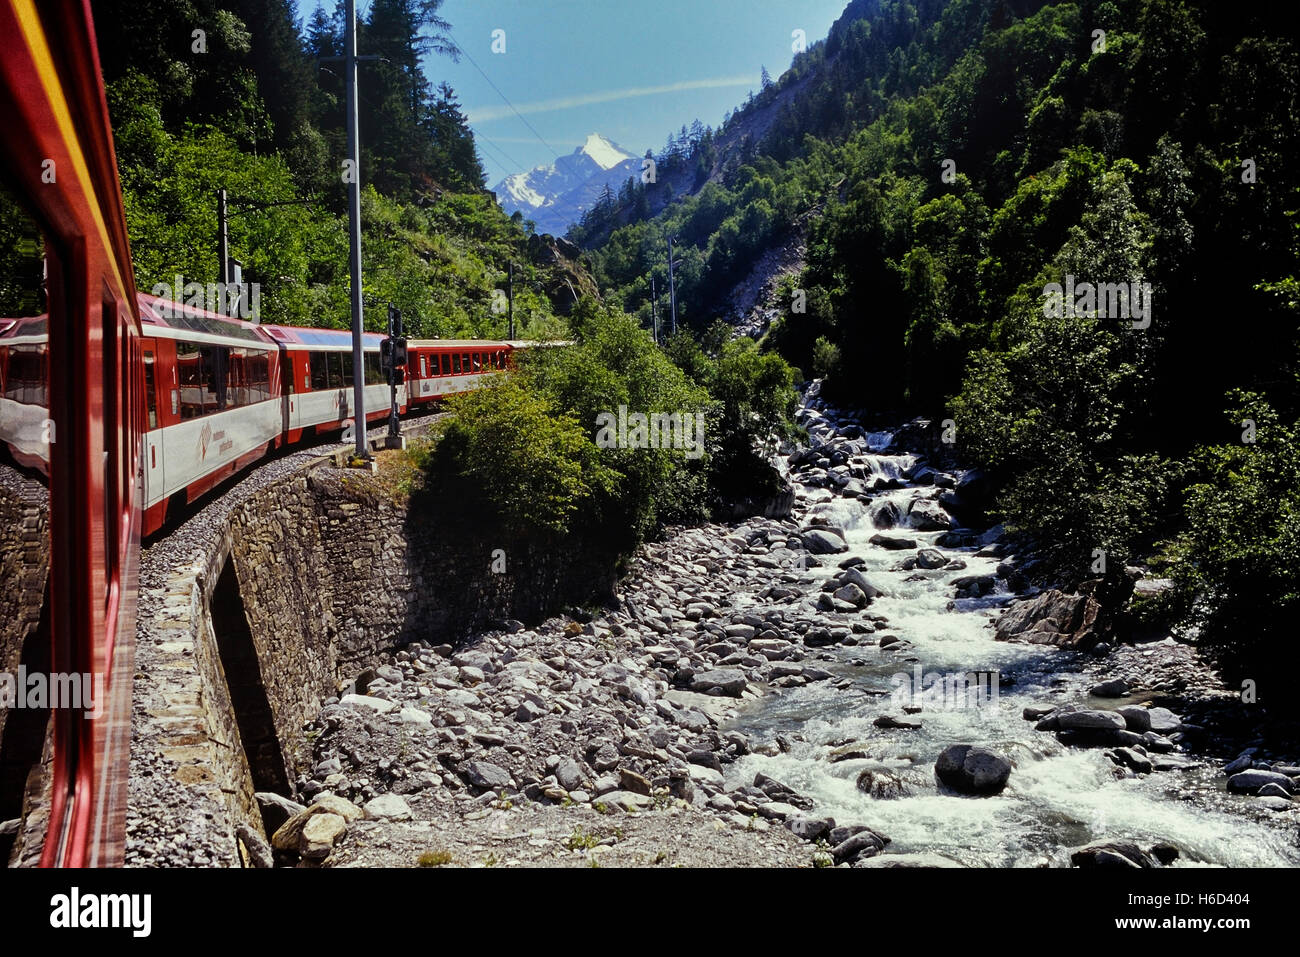 Matterhorn Gotthard Bahn railway. Switzerland Stock Photo